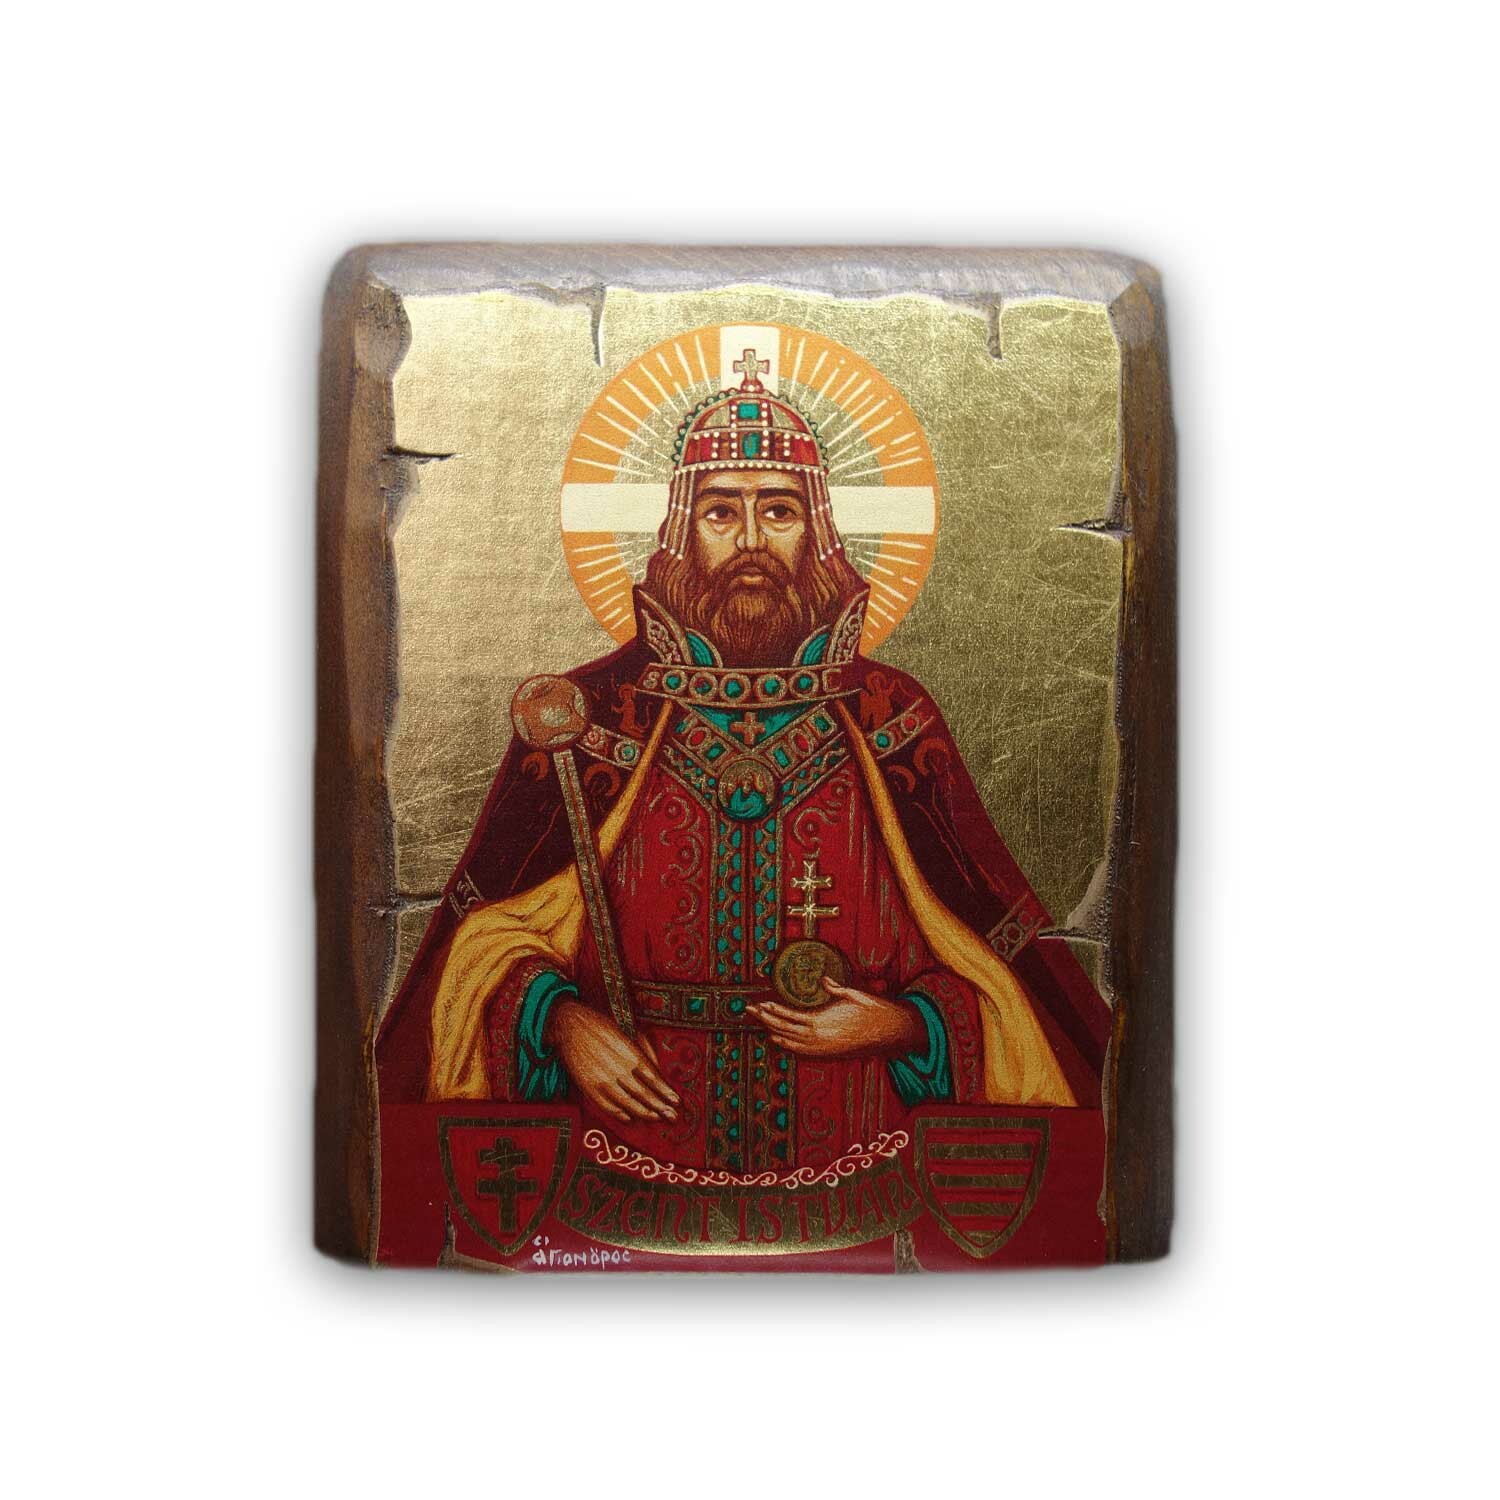 Saint Stephen I of Hungary